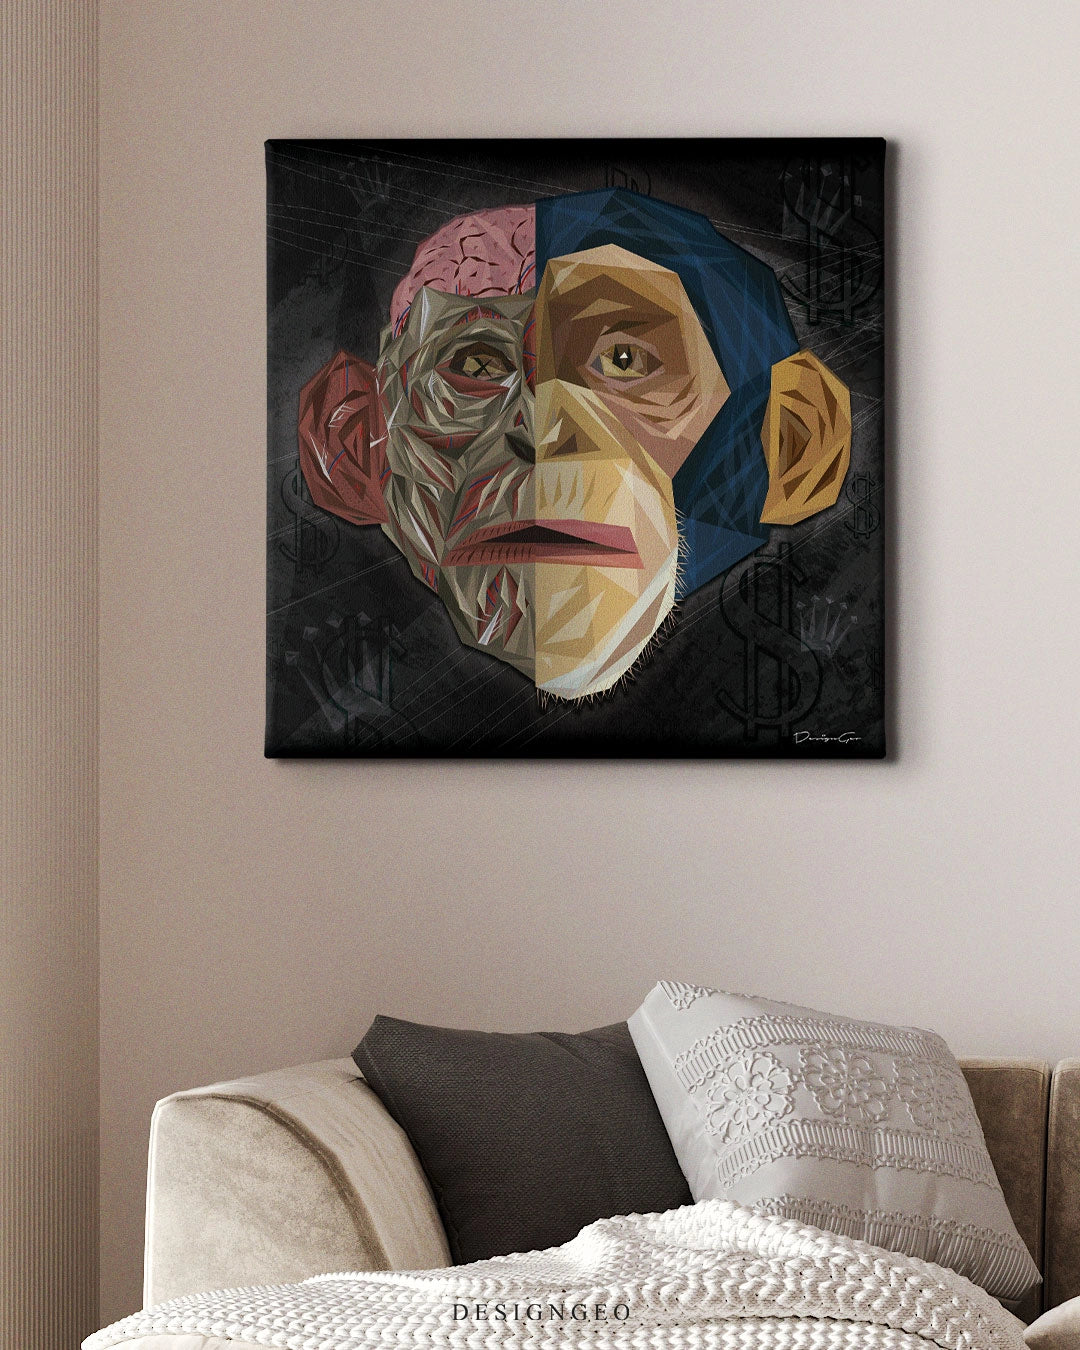 Anatomy Monkey Art Square Canvas Print by DesignGeo